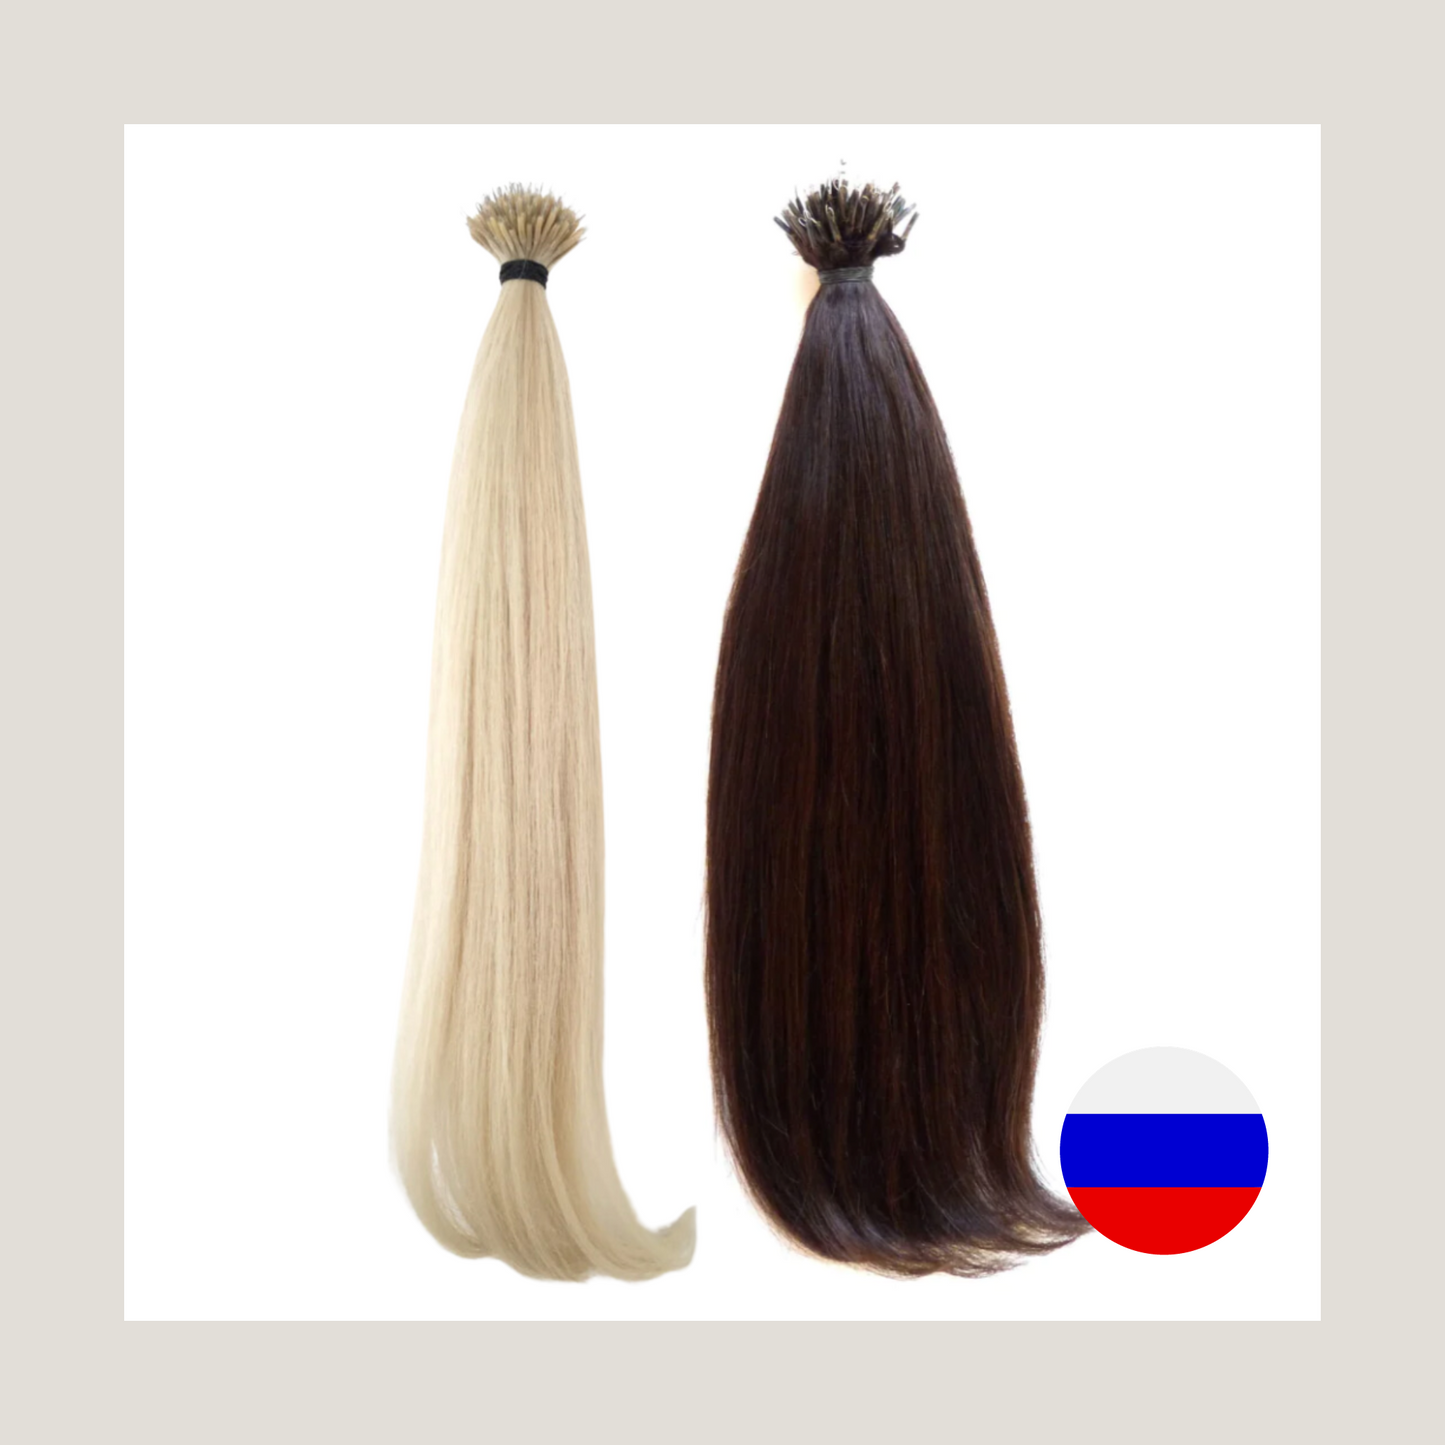 Russian Virgin Human Hair Extensions - Nano Ring Extensions